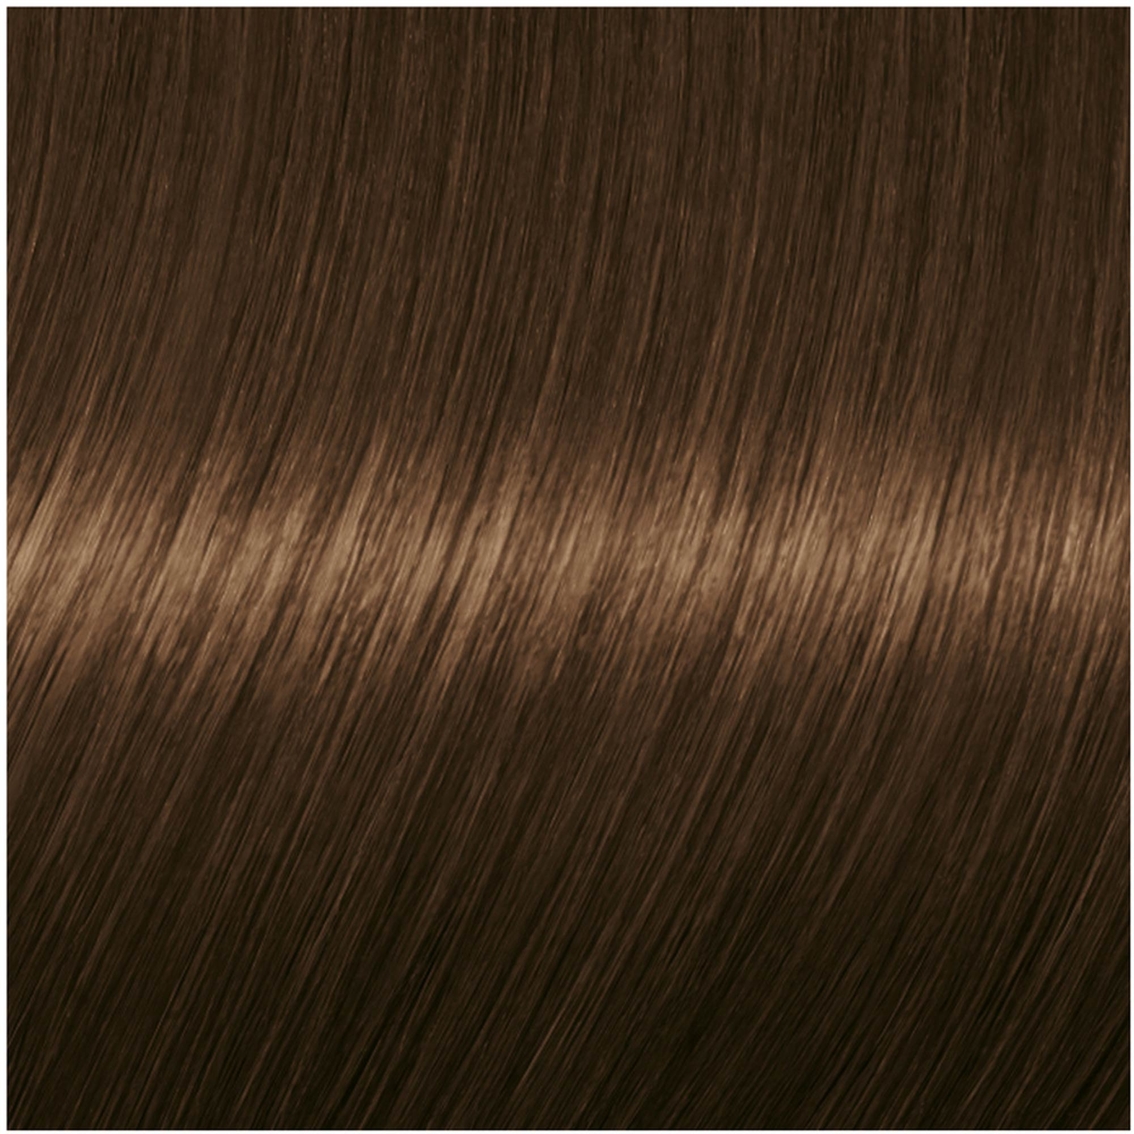 Schwarzkopf Keratin Color Bond Enforcing Permanent Hair Dye Treatment - Image 2 of 2